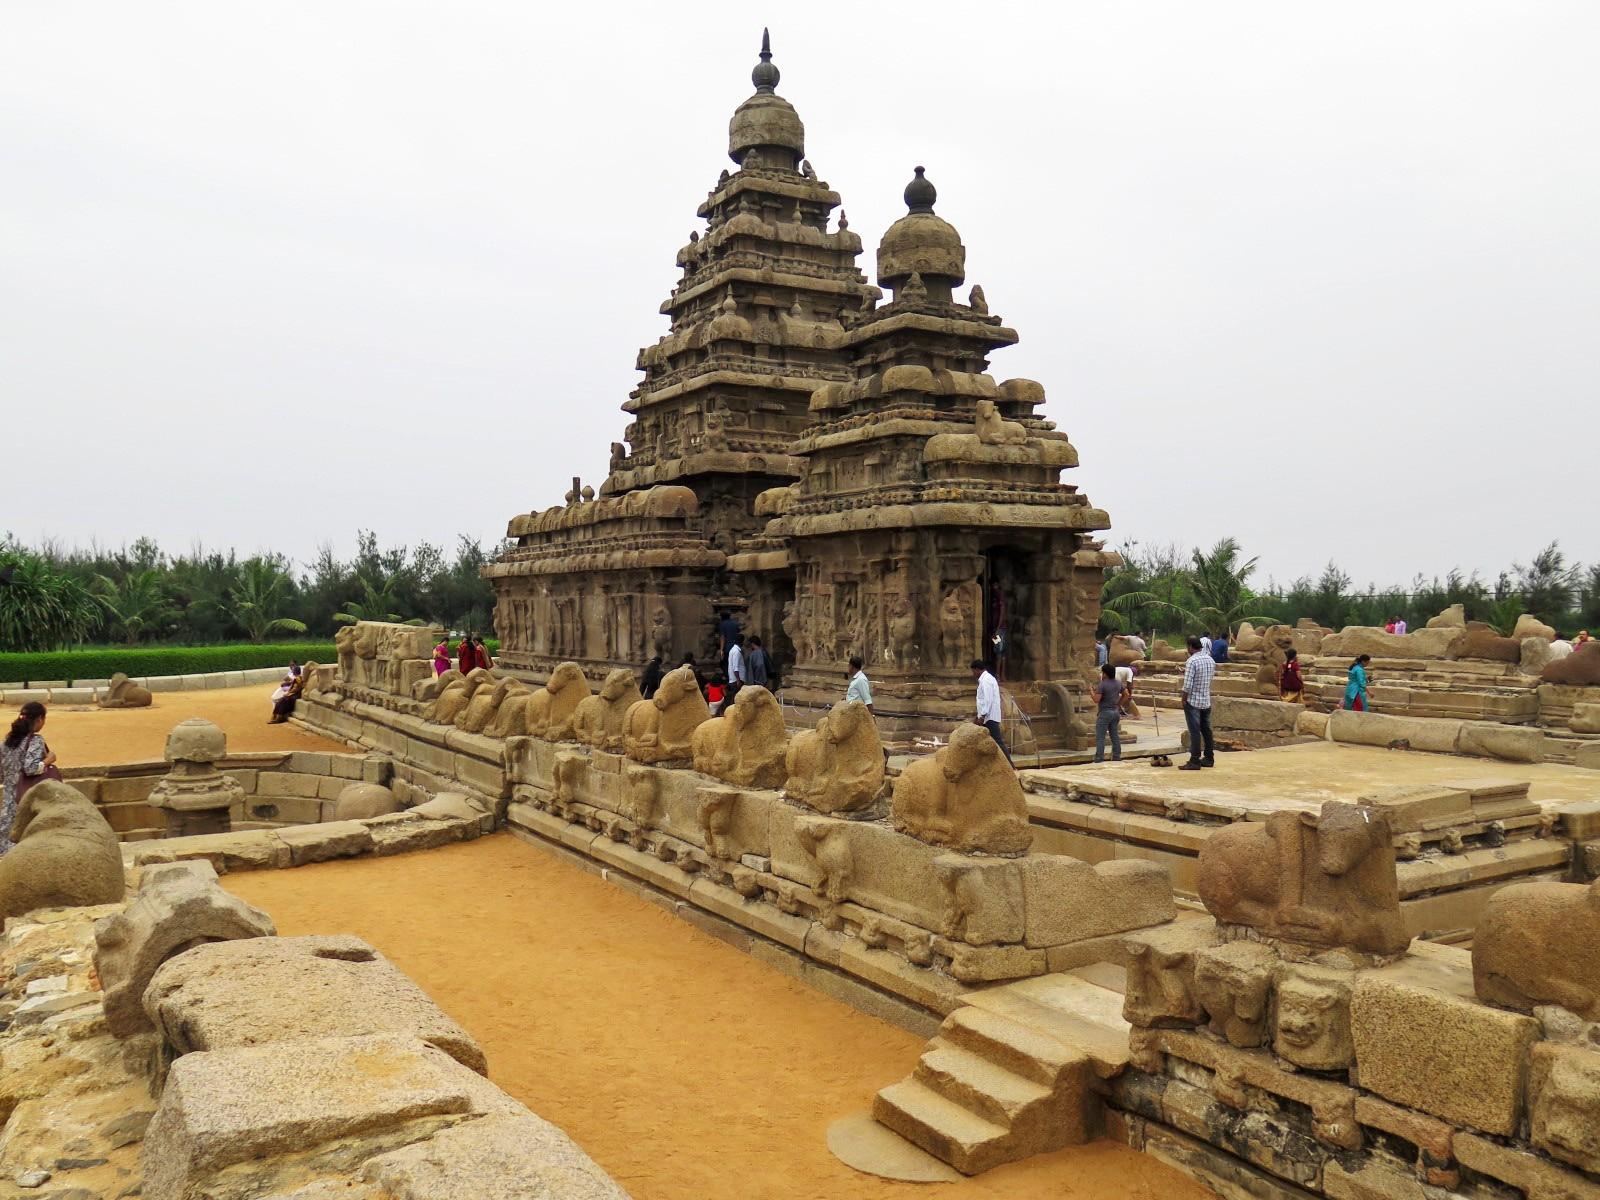 Cover image of this place Mahabalipuram / Mamalapuram